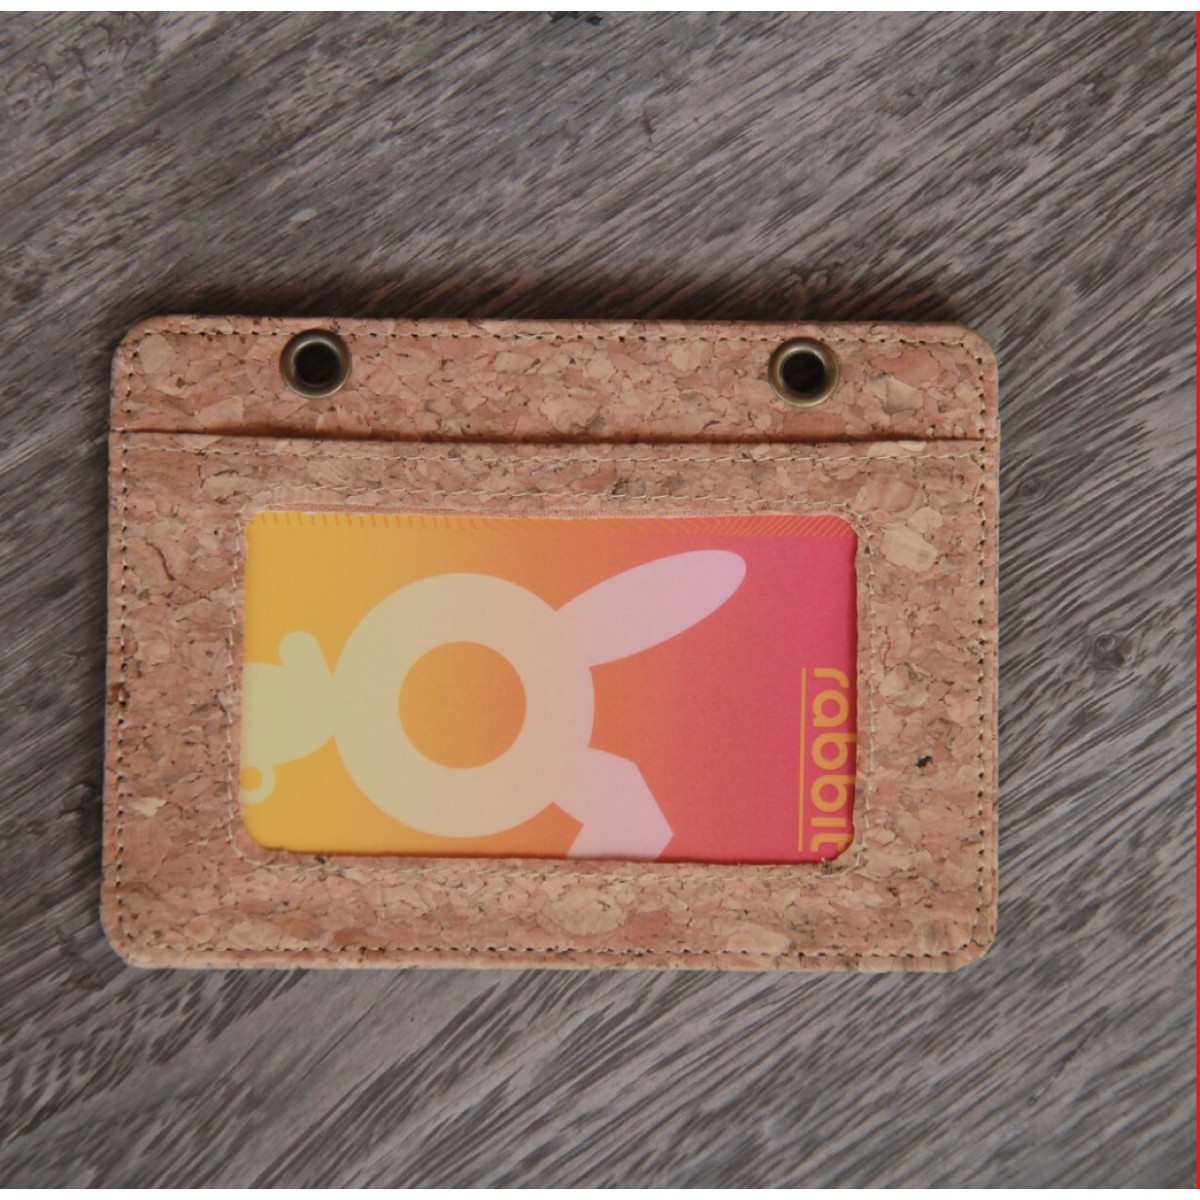 Kartenhalter & Lanyard aus Kork /  Ausweishülle, vegan ohne Plastik BY COPALA